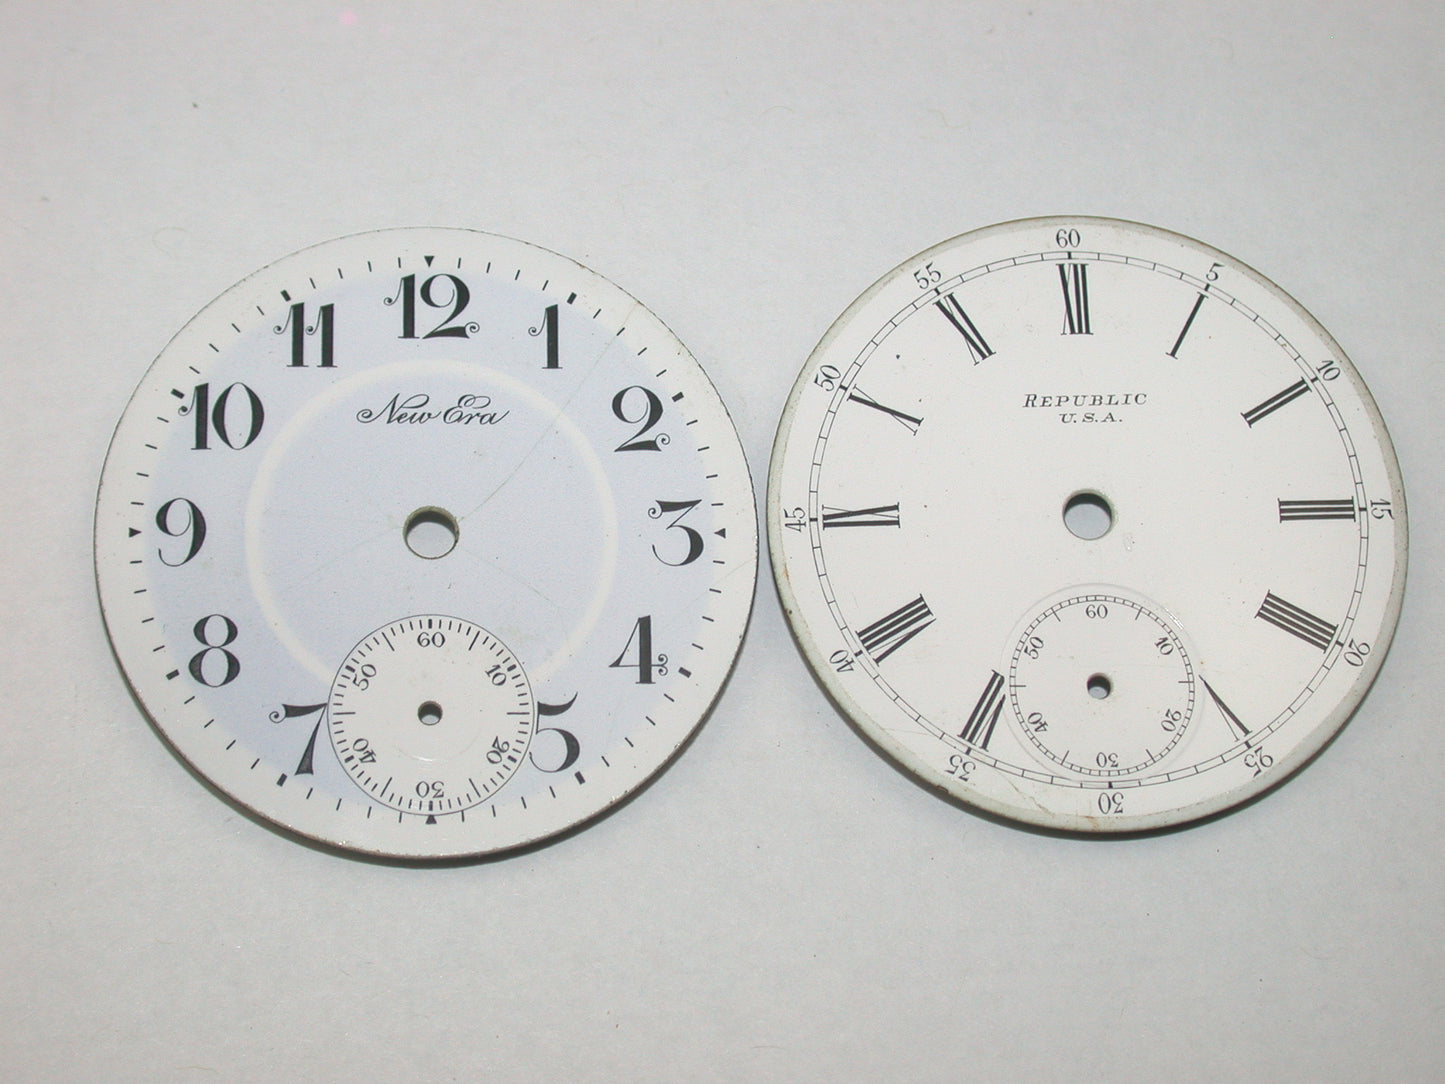 Lot 29- New York Standard, New Era & Republic Pocket Watch Dials